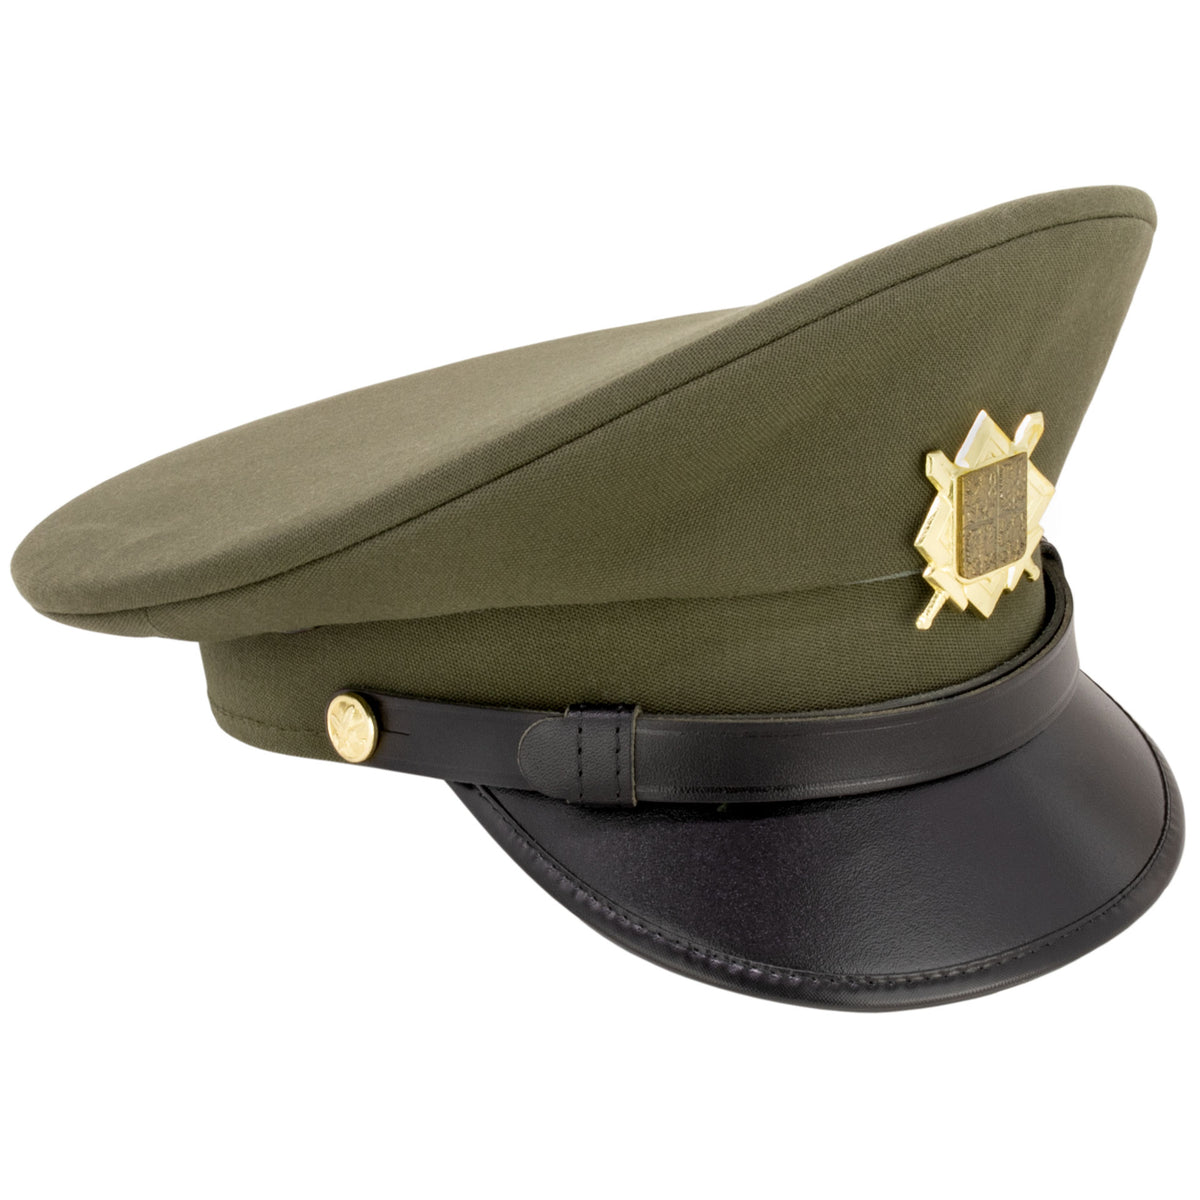 Czech Army Officer's Hat